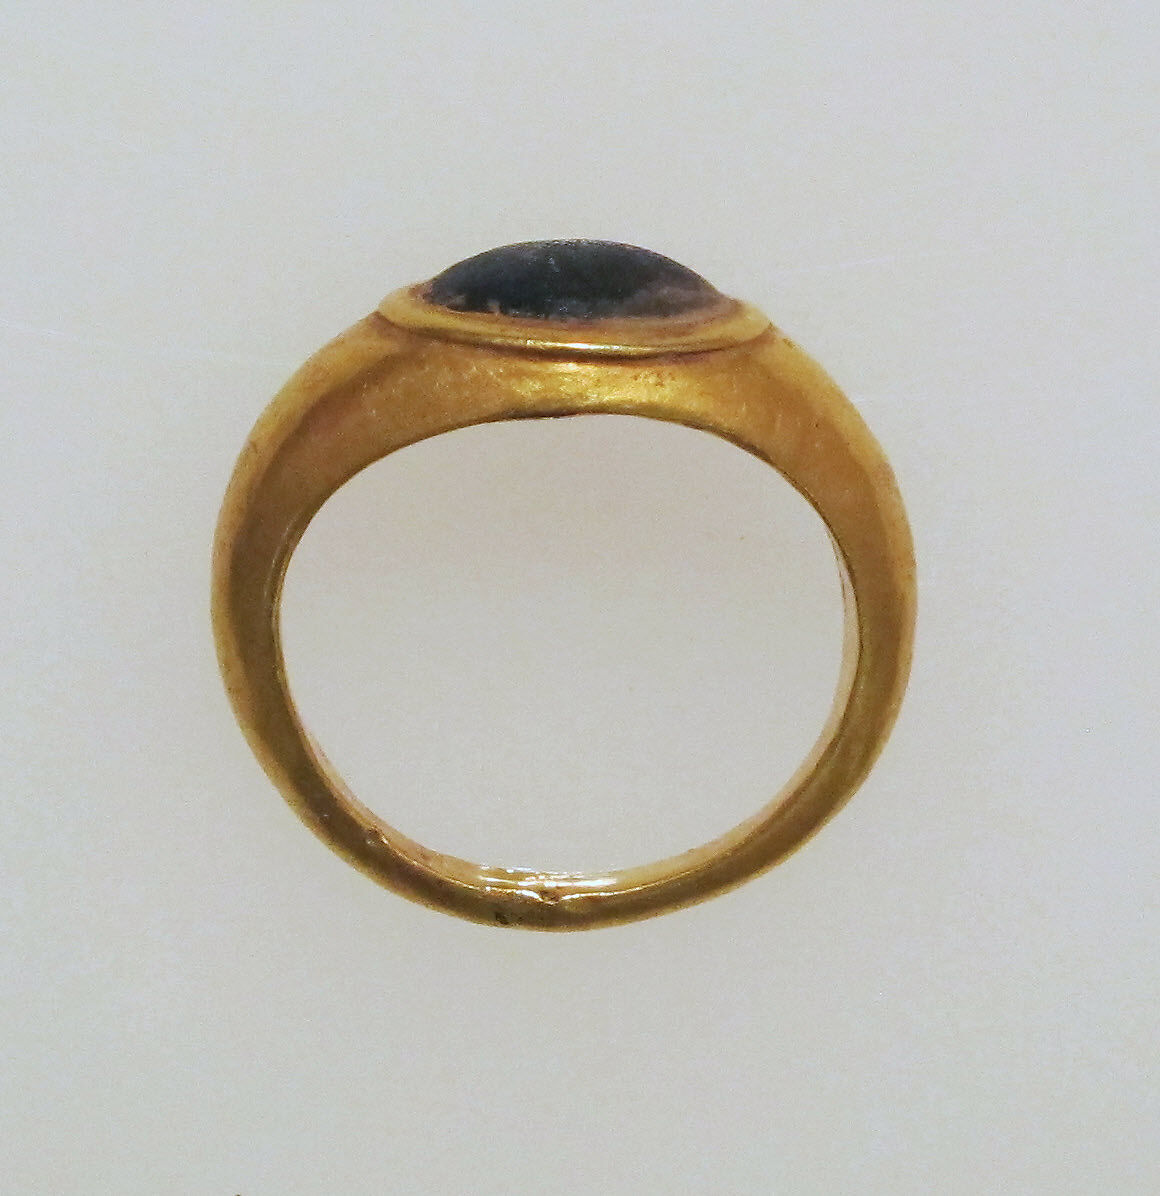 Ring with glass bezel, Gold, glass in bezel, Roman 